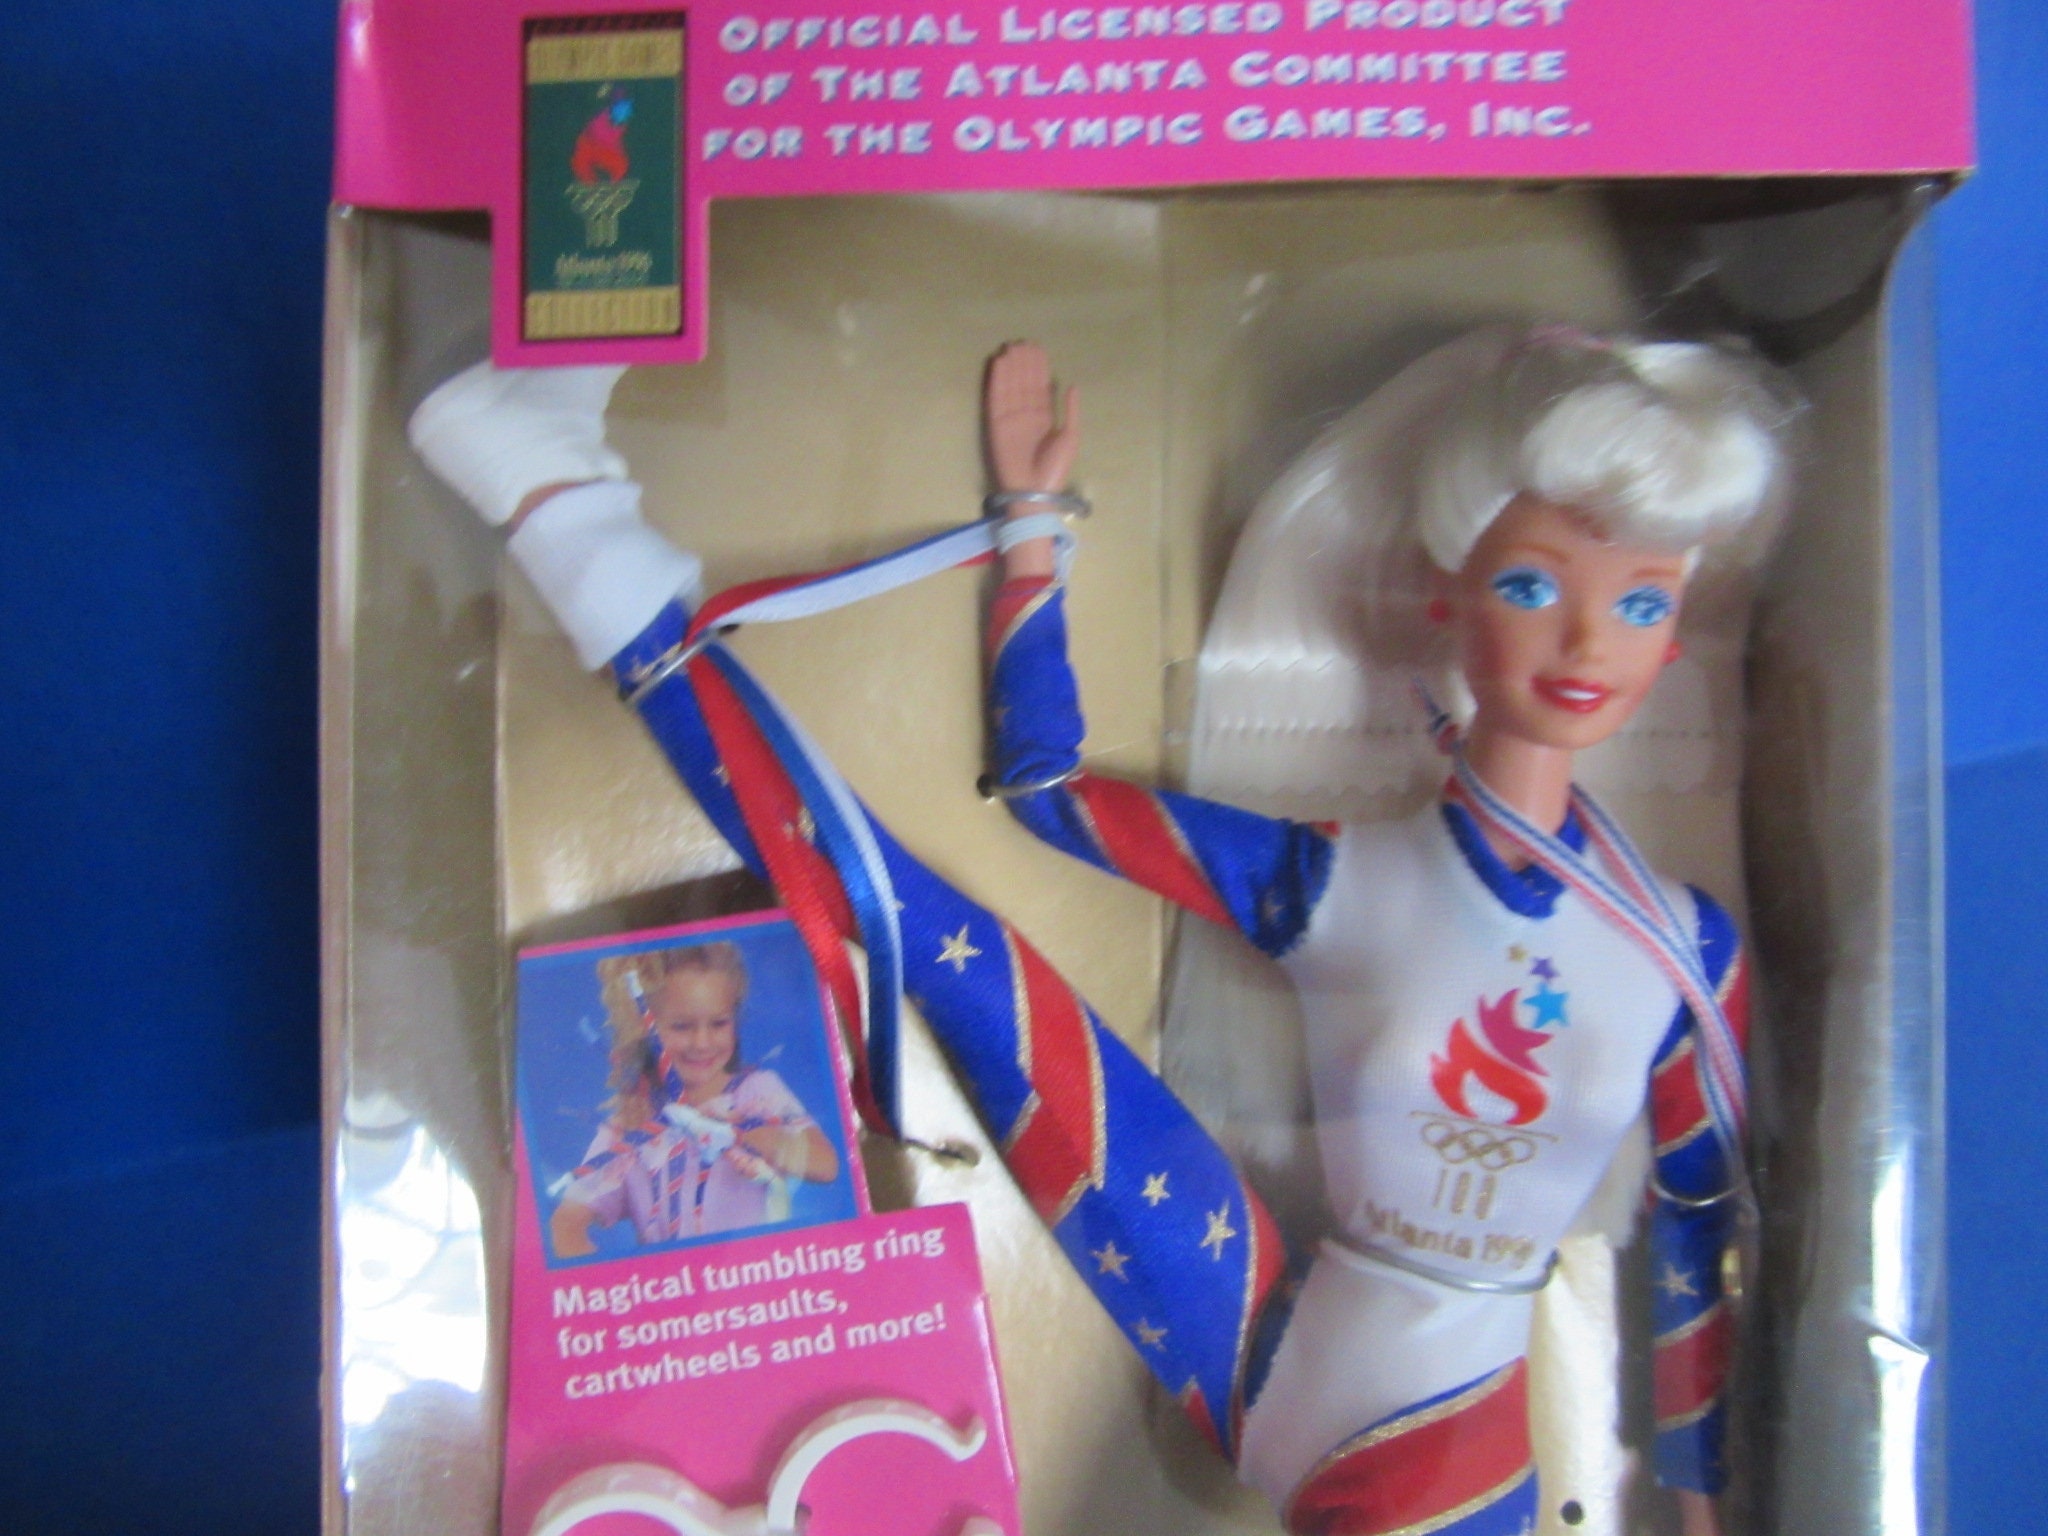 Barbie Olympic Gymnast Barbie Doll (Auburn Hair 1995)